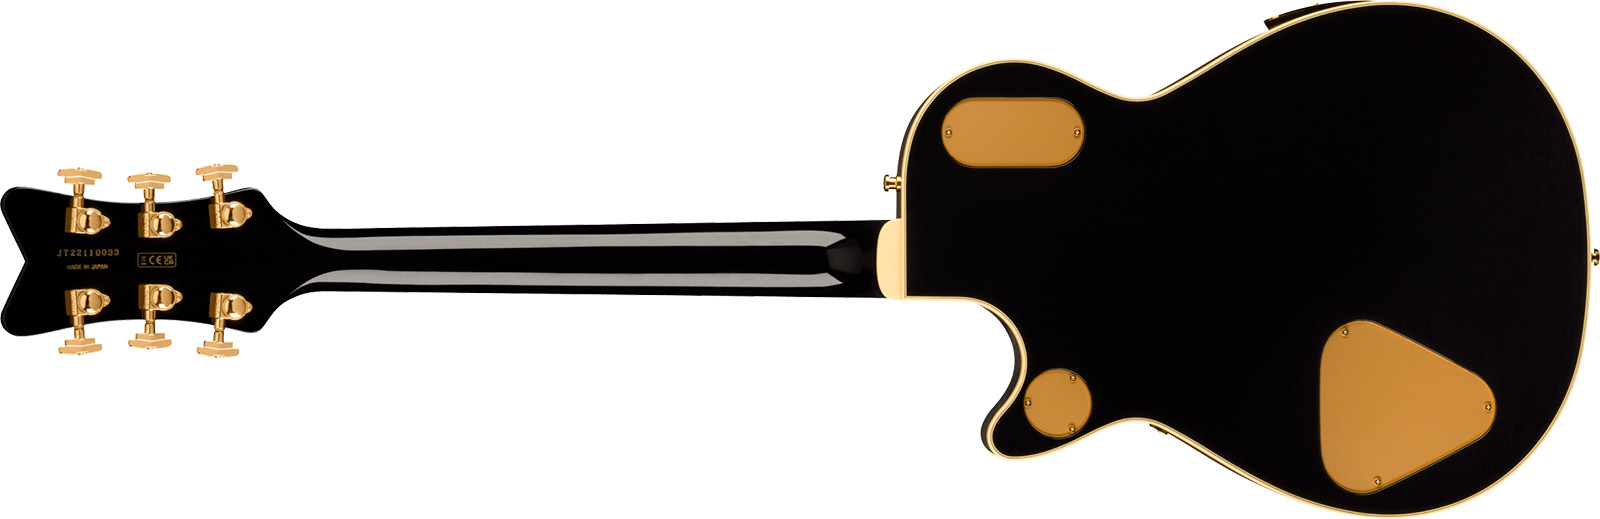 Gretsch G6134tg Paisley Penguin Bigsby Pro Jap 2h Trem Eb - Black Paisley - Single-Cut-E-Gitarre - Variation 1